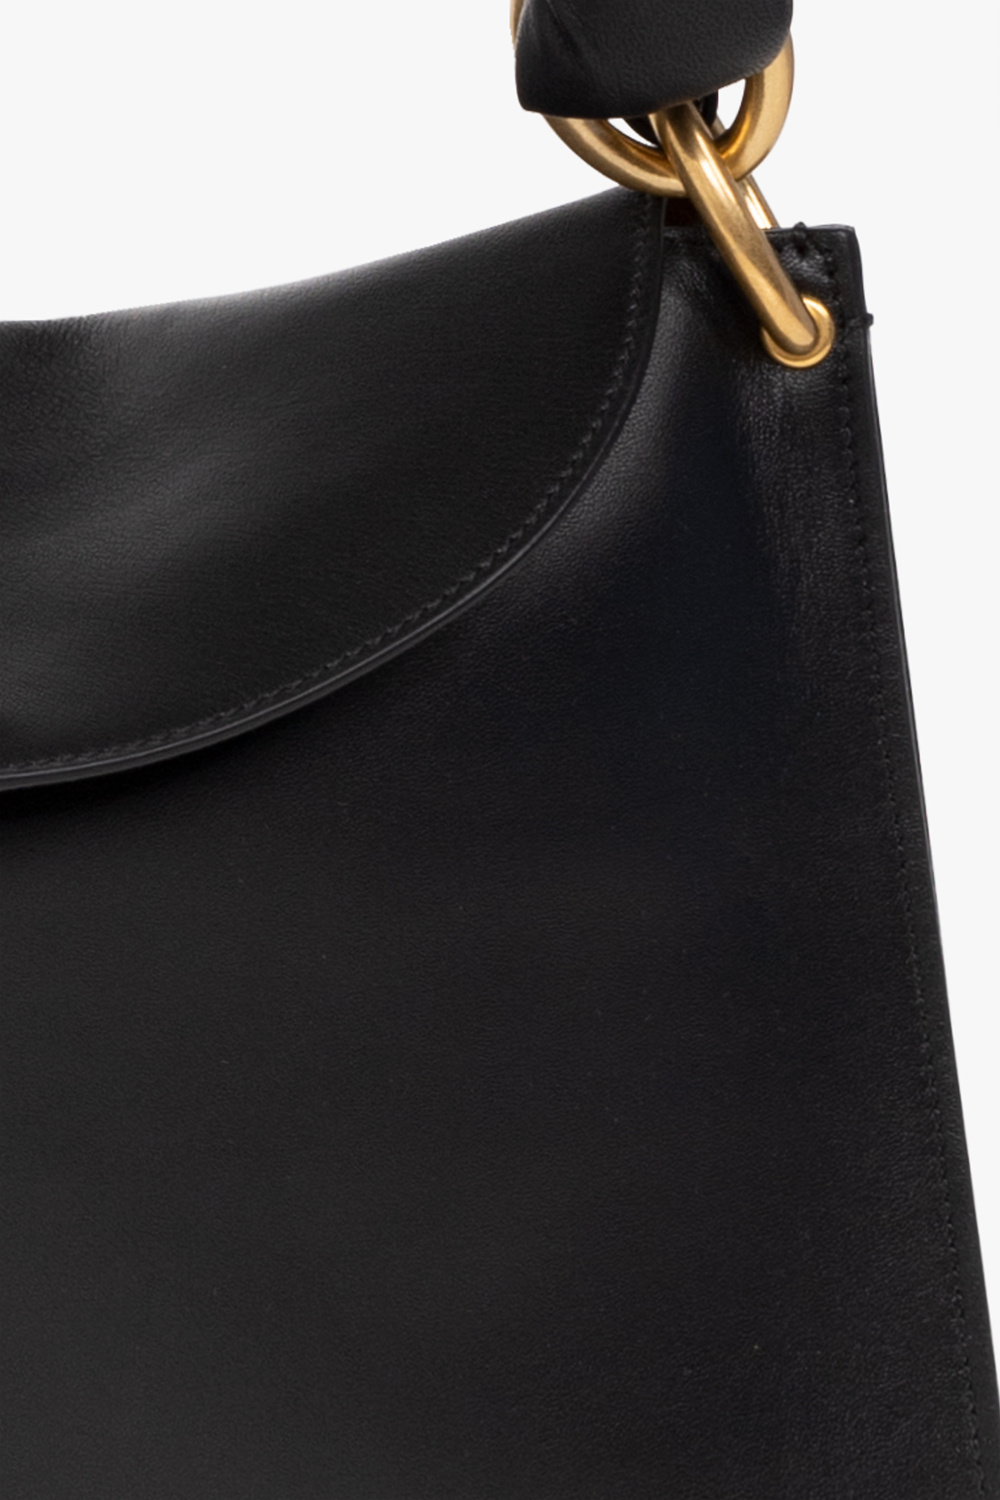 Proenza Schouler ‘Braid’ leather shoulder bag